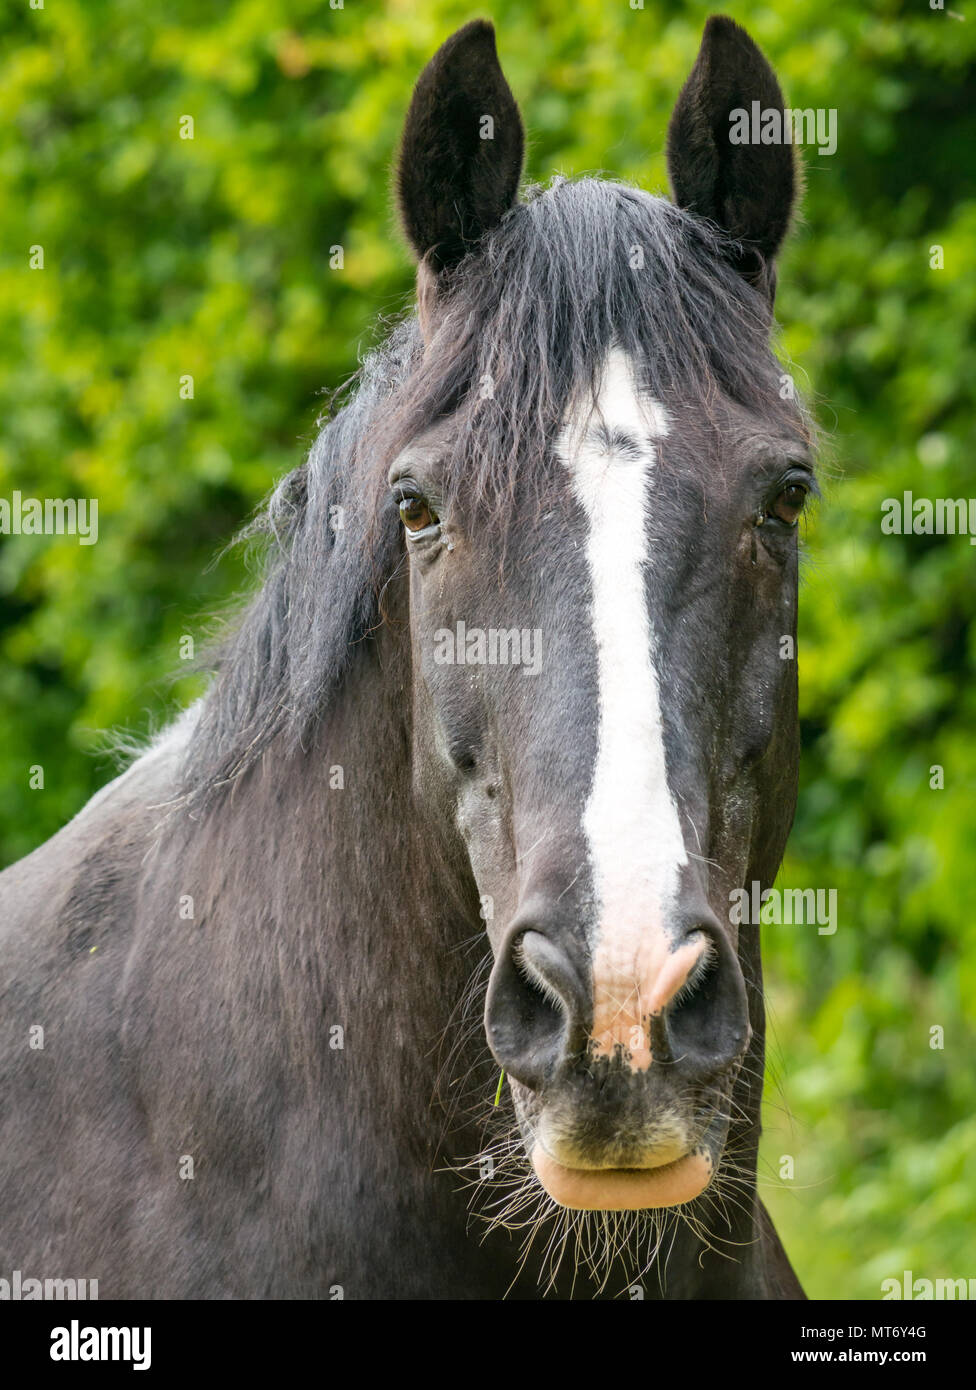 Cerca de vigilante negro con cabeza de caballo blanco blaze contra borroso fondo follaje verde Foto de stock